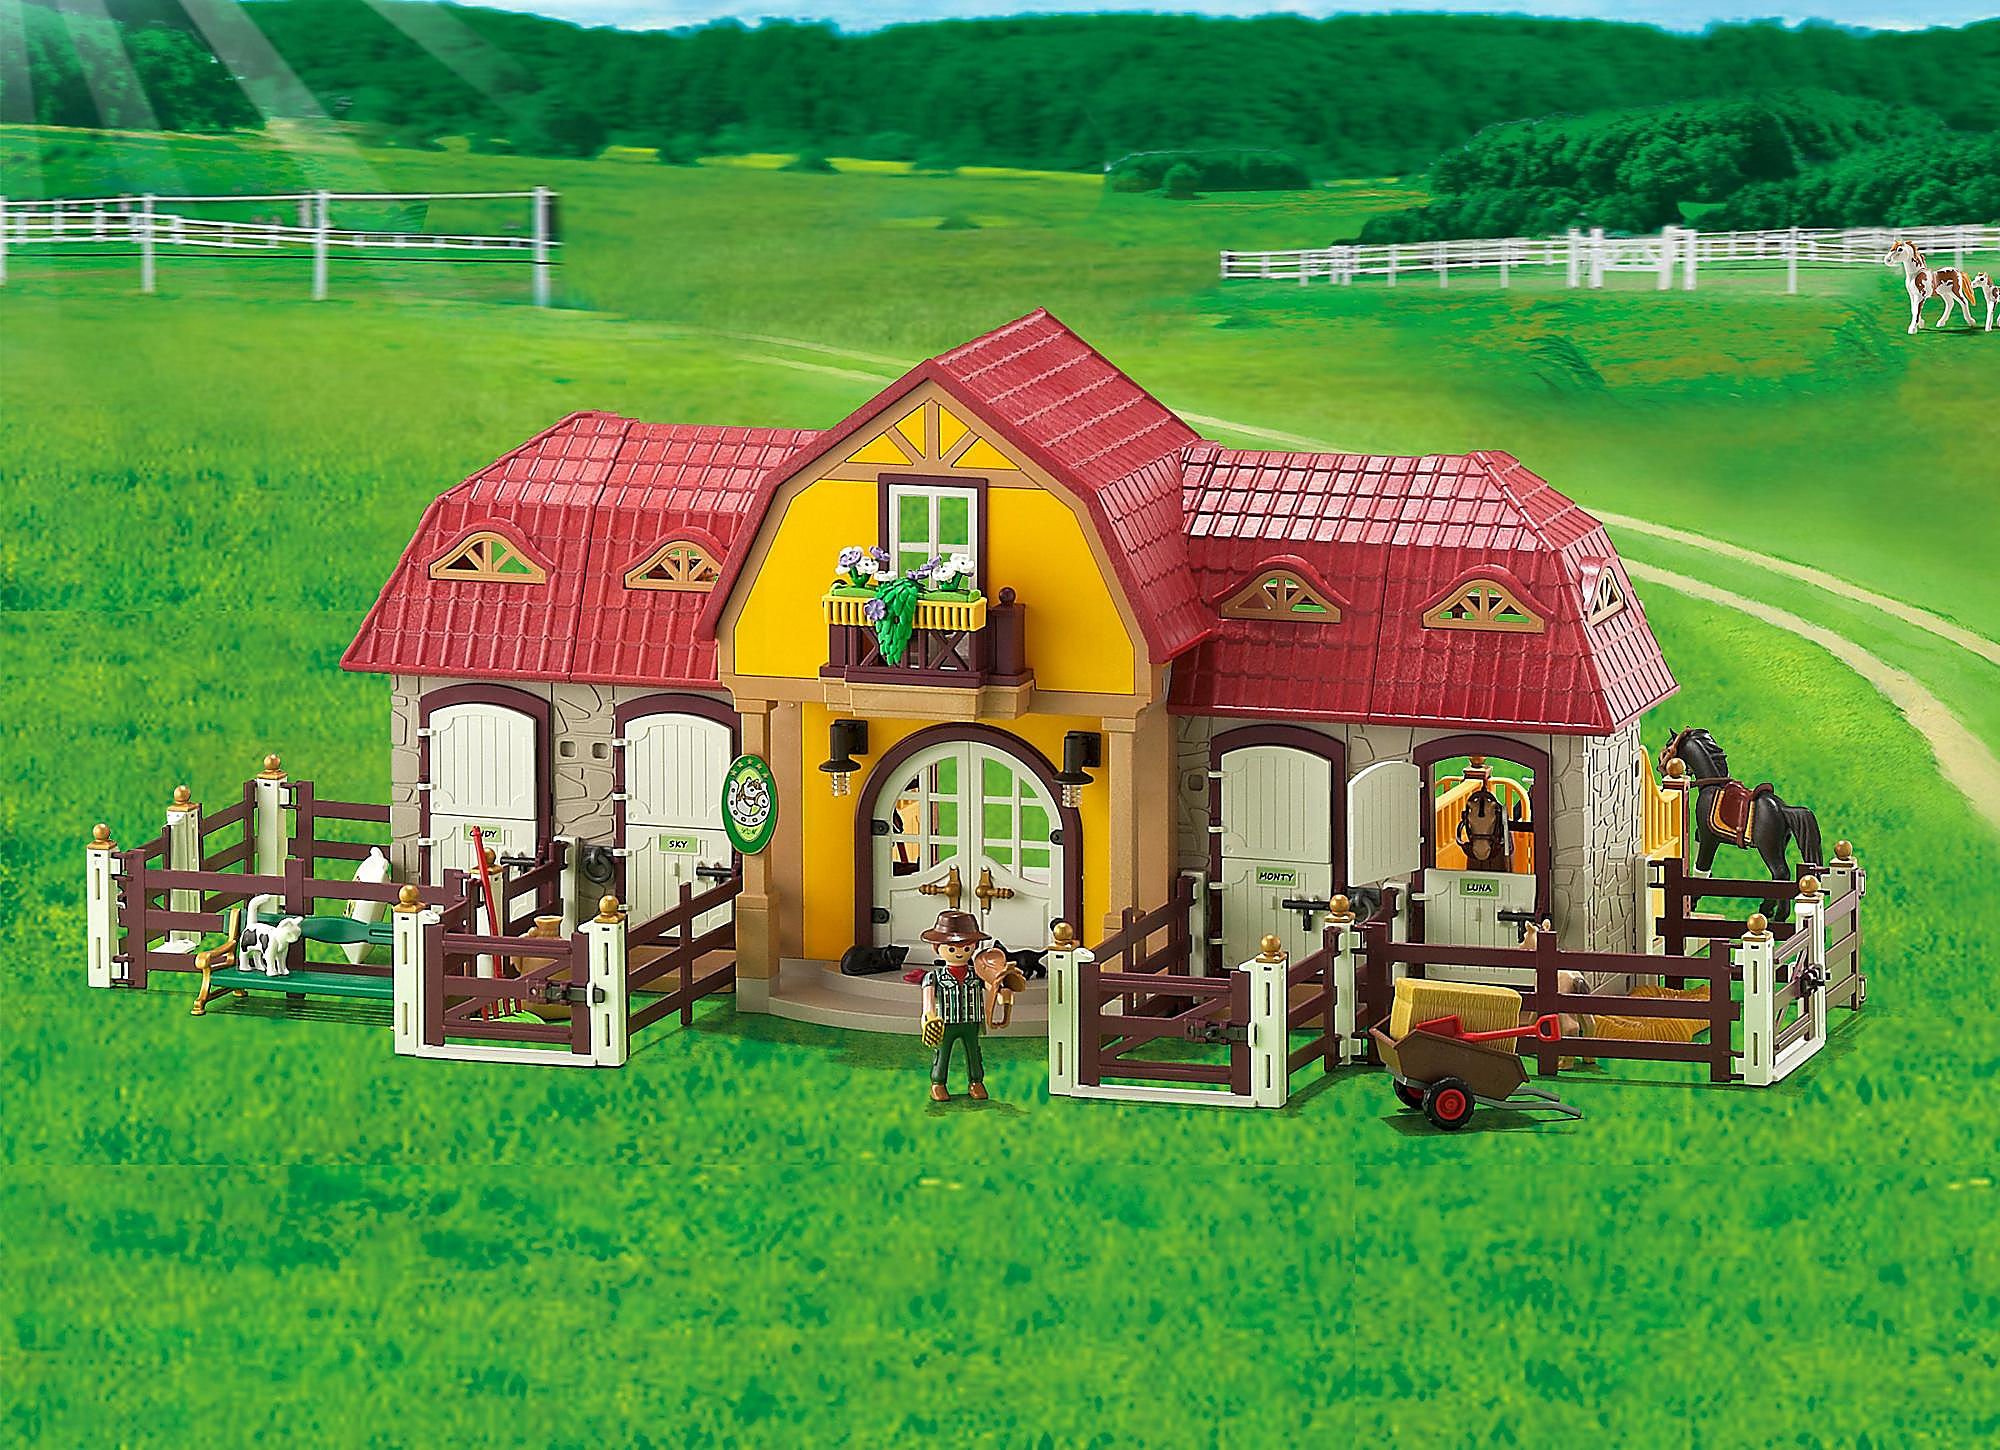 Grand Ranch de chevaux Playmobil - 5221